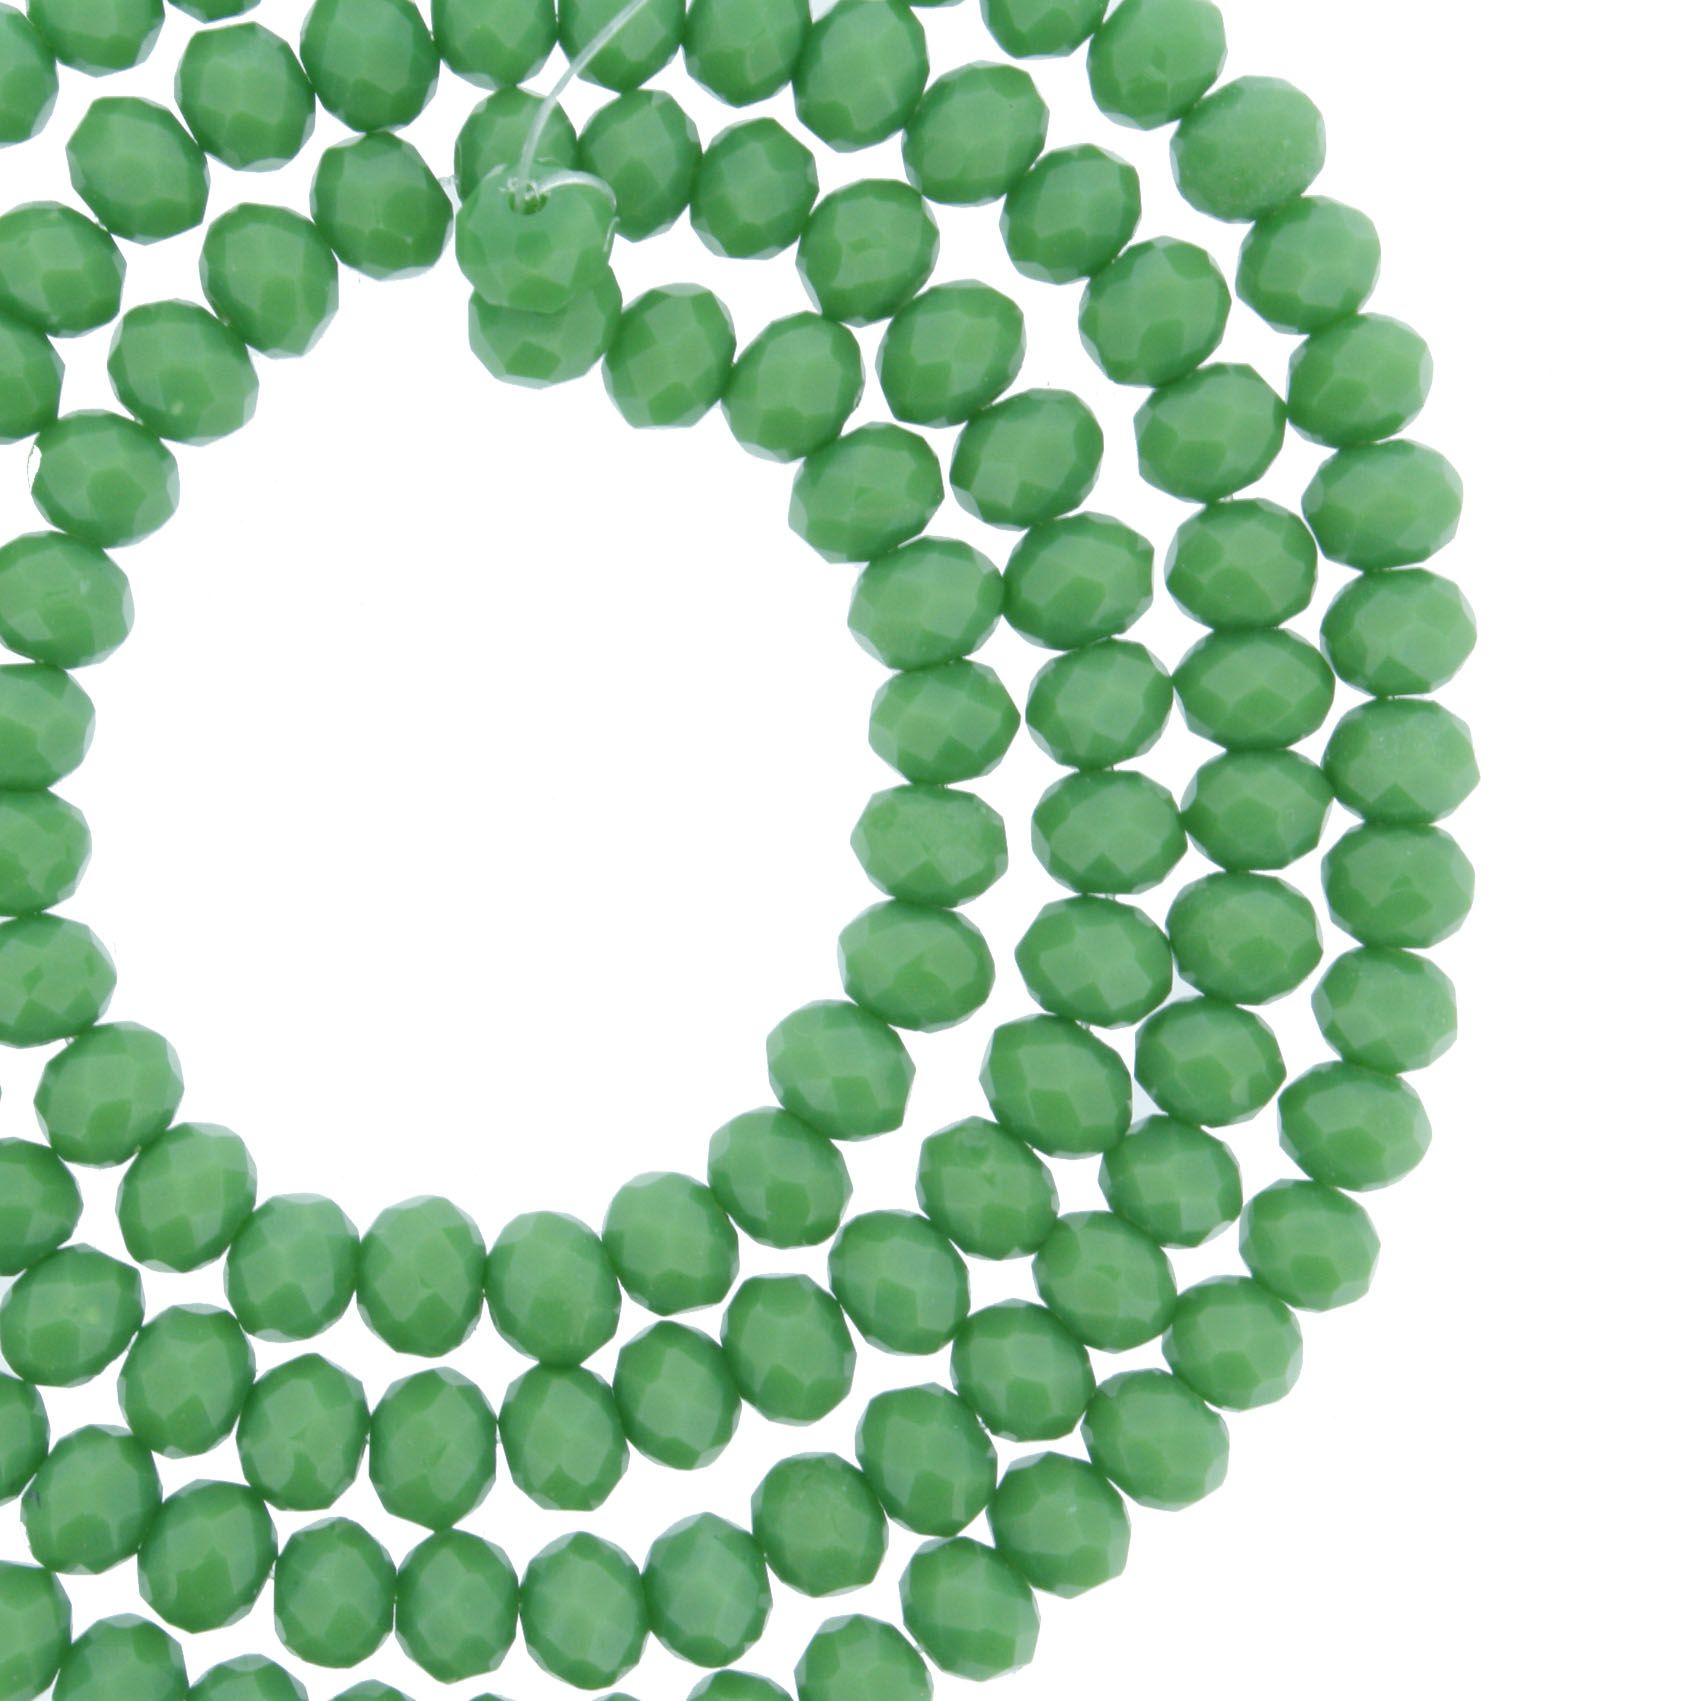 Fio de Cristal - Flat® - Verde - 4mm - Stéphanie Bijoux® - Peças para Bijuterias e Artesanato